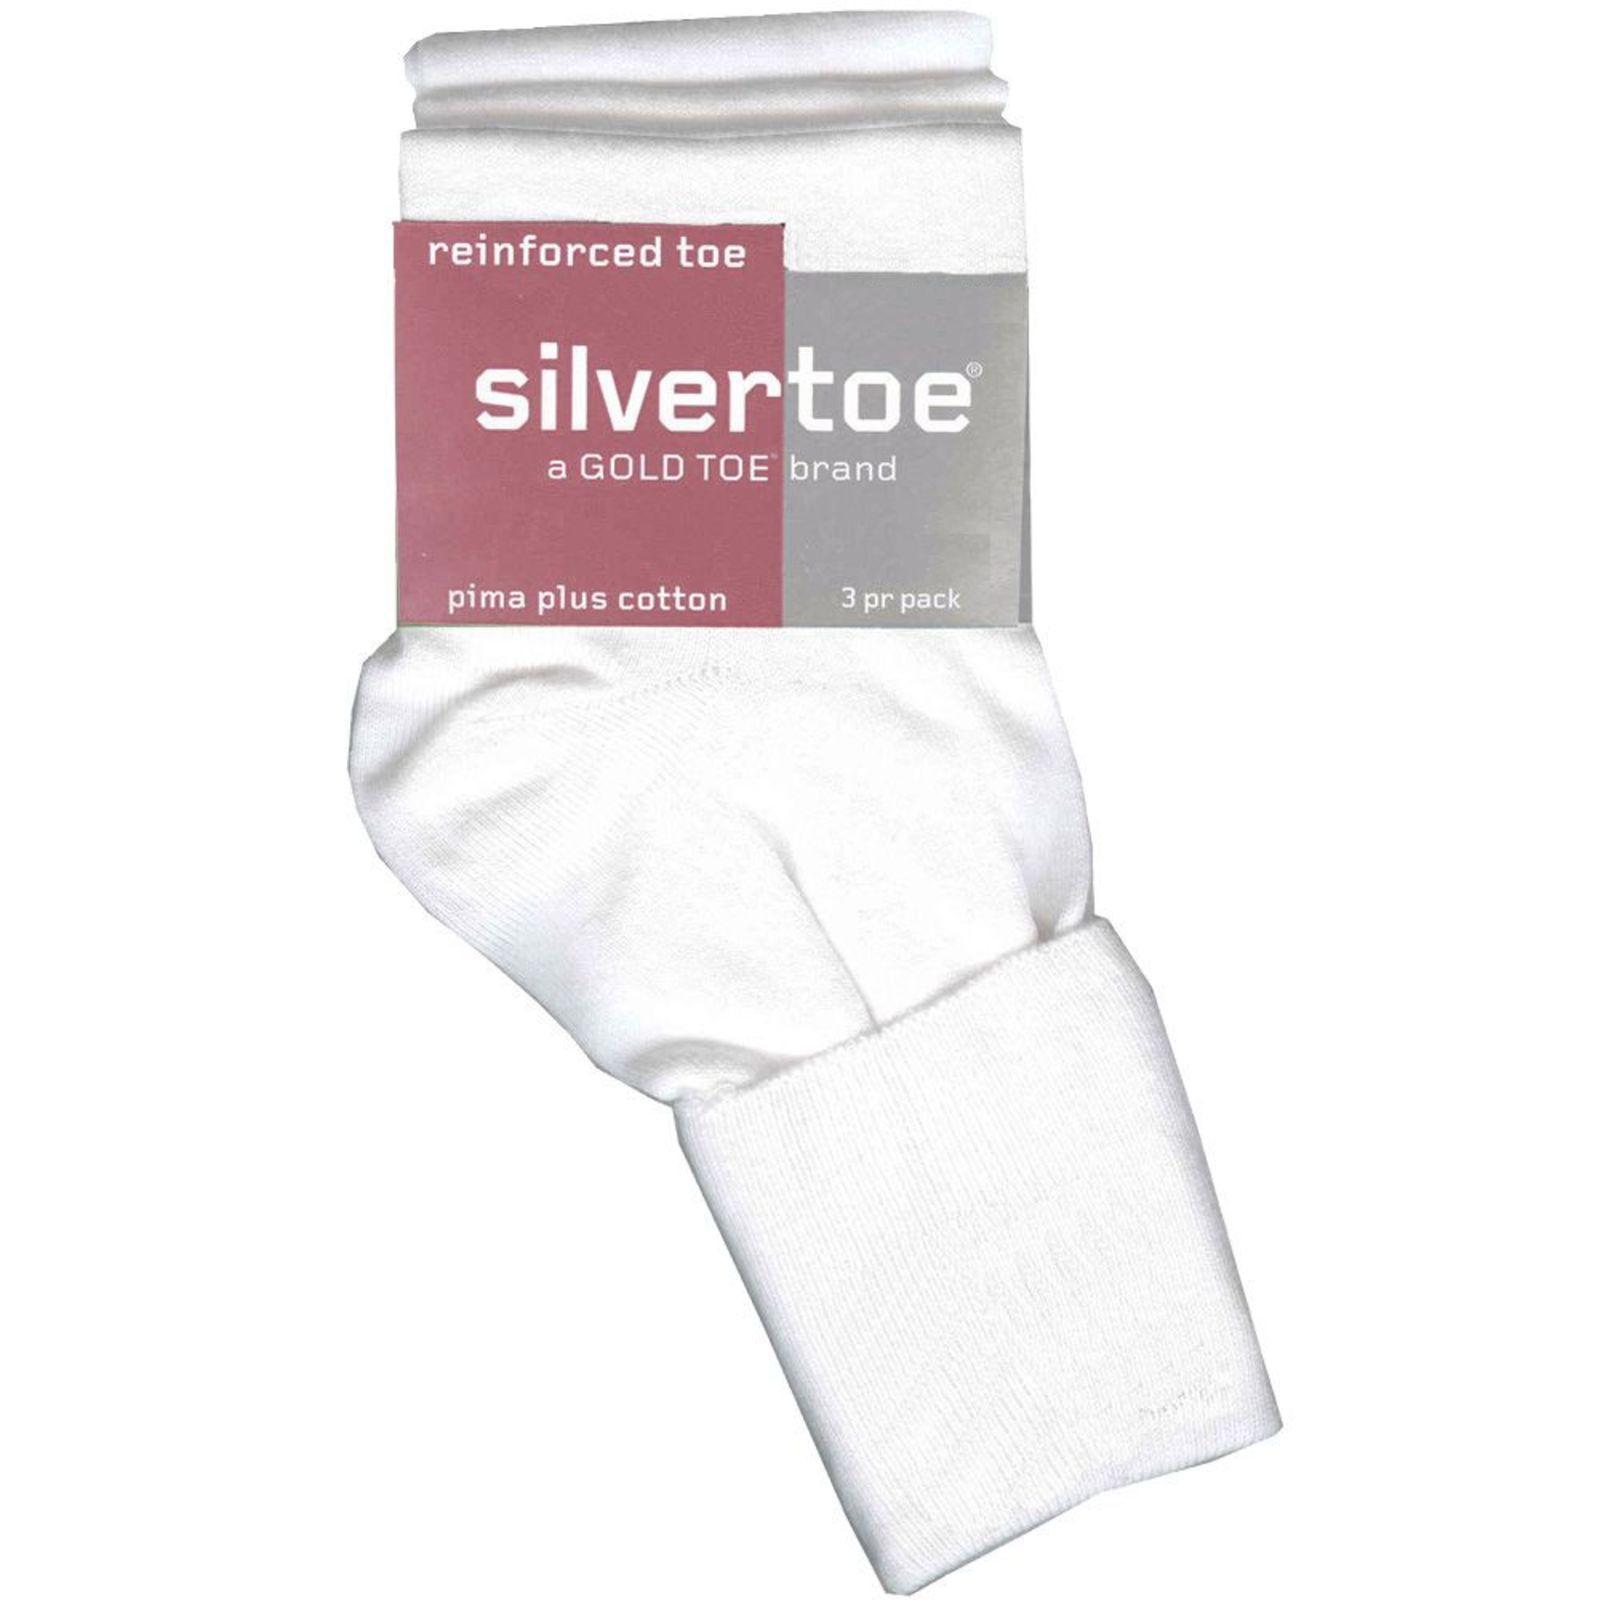 Silvertoe Anklet Socks